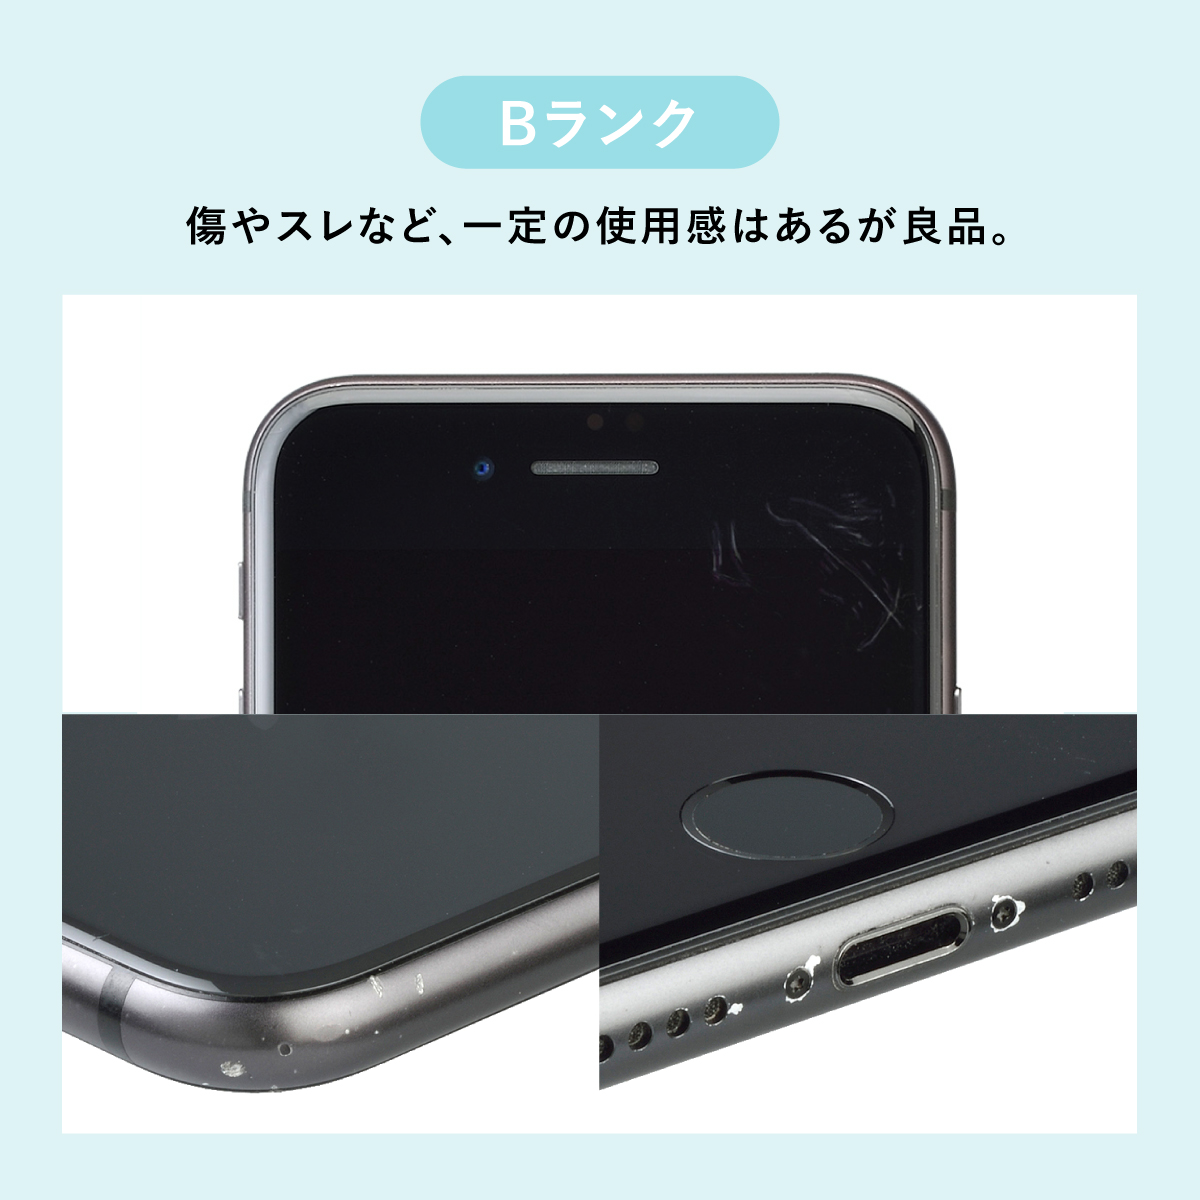 iPhone XS 256GB SIMフリー au docomo softbank ゴールド シルバー スペースグレイ スマホ スマートフォン